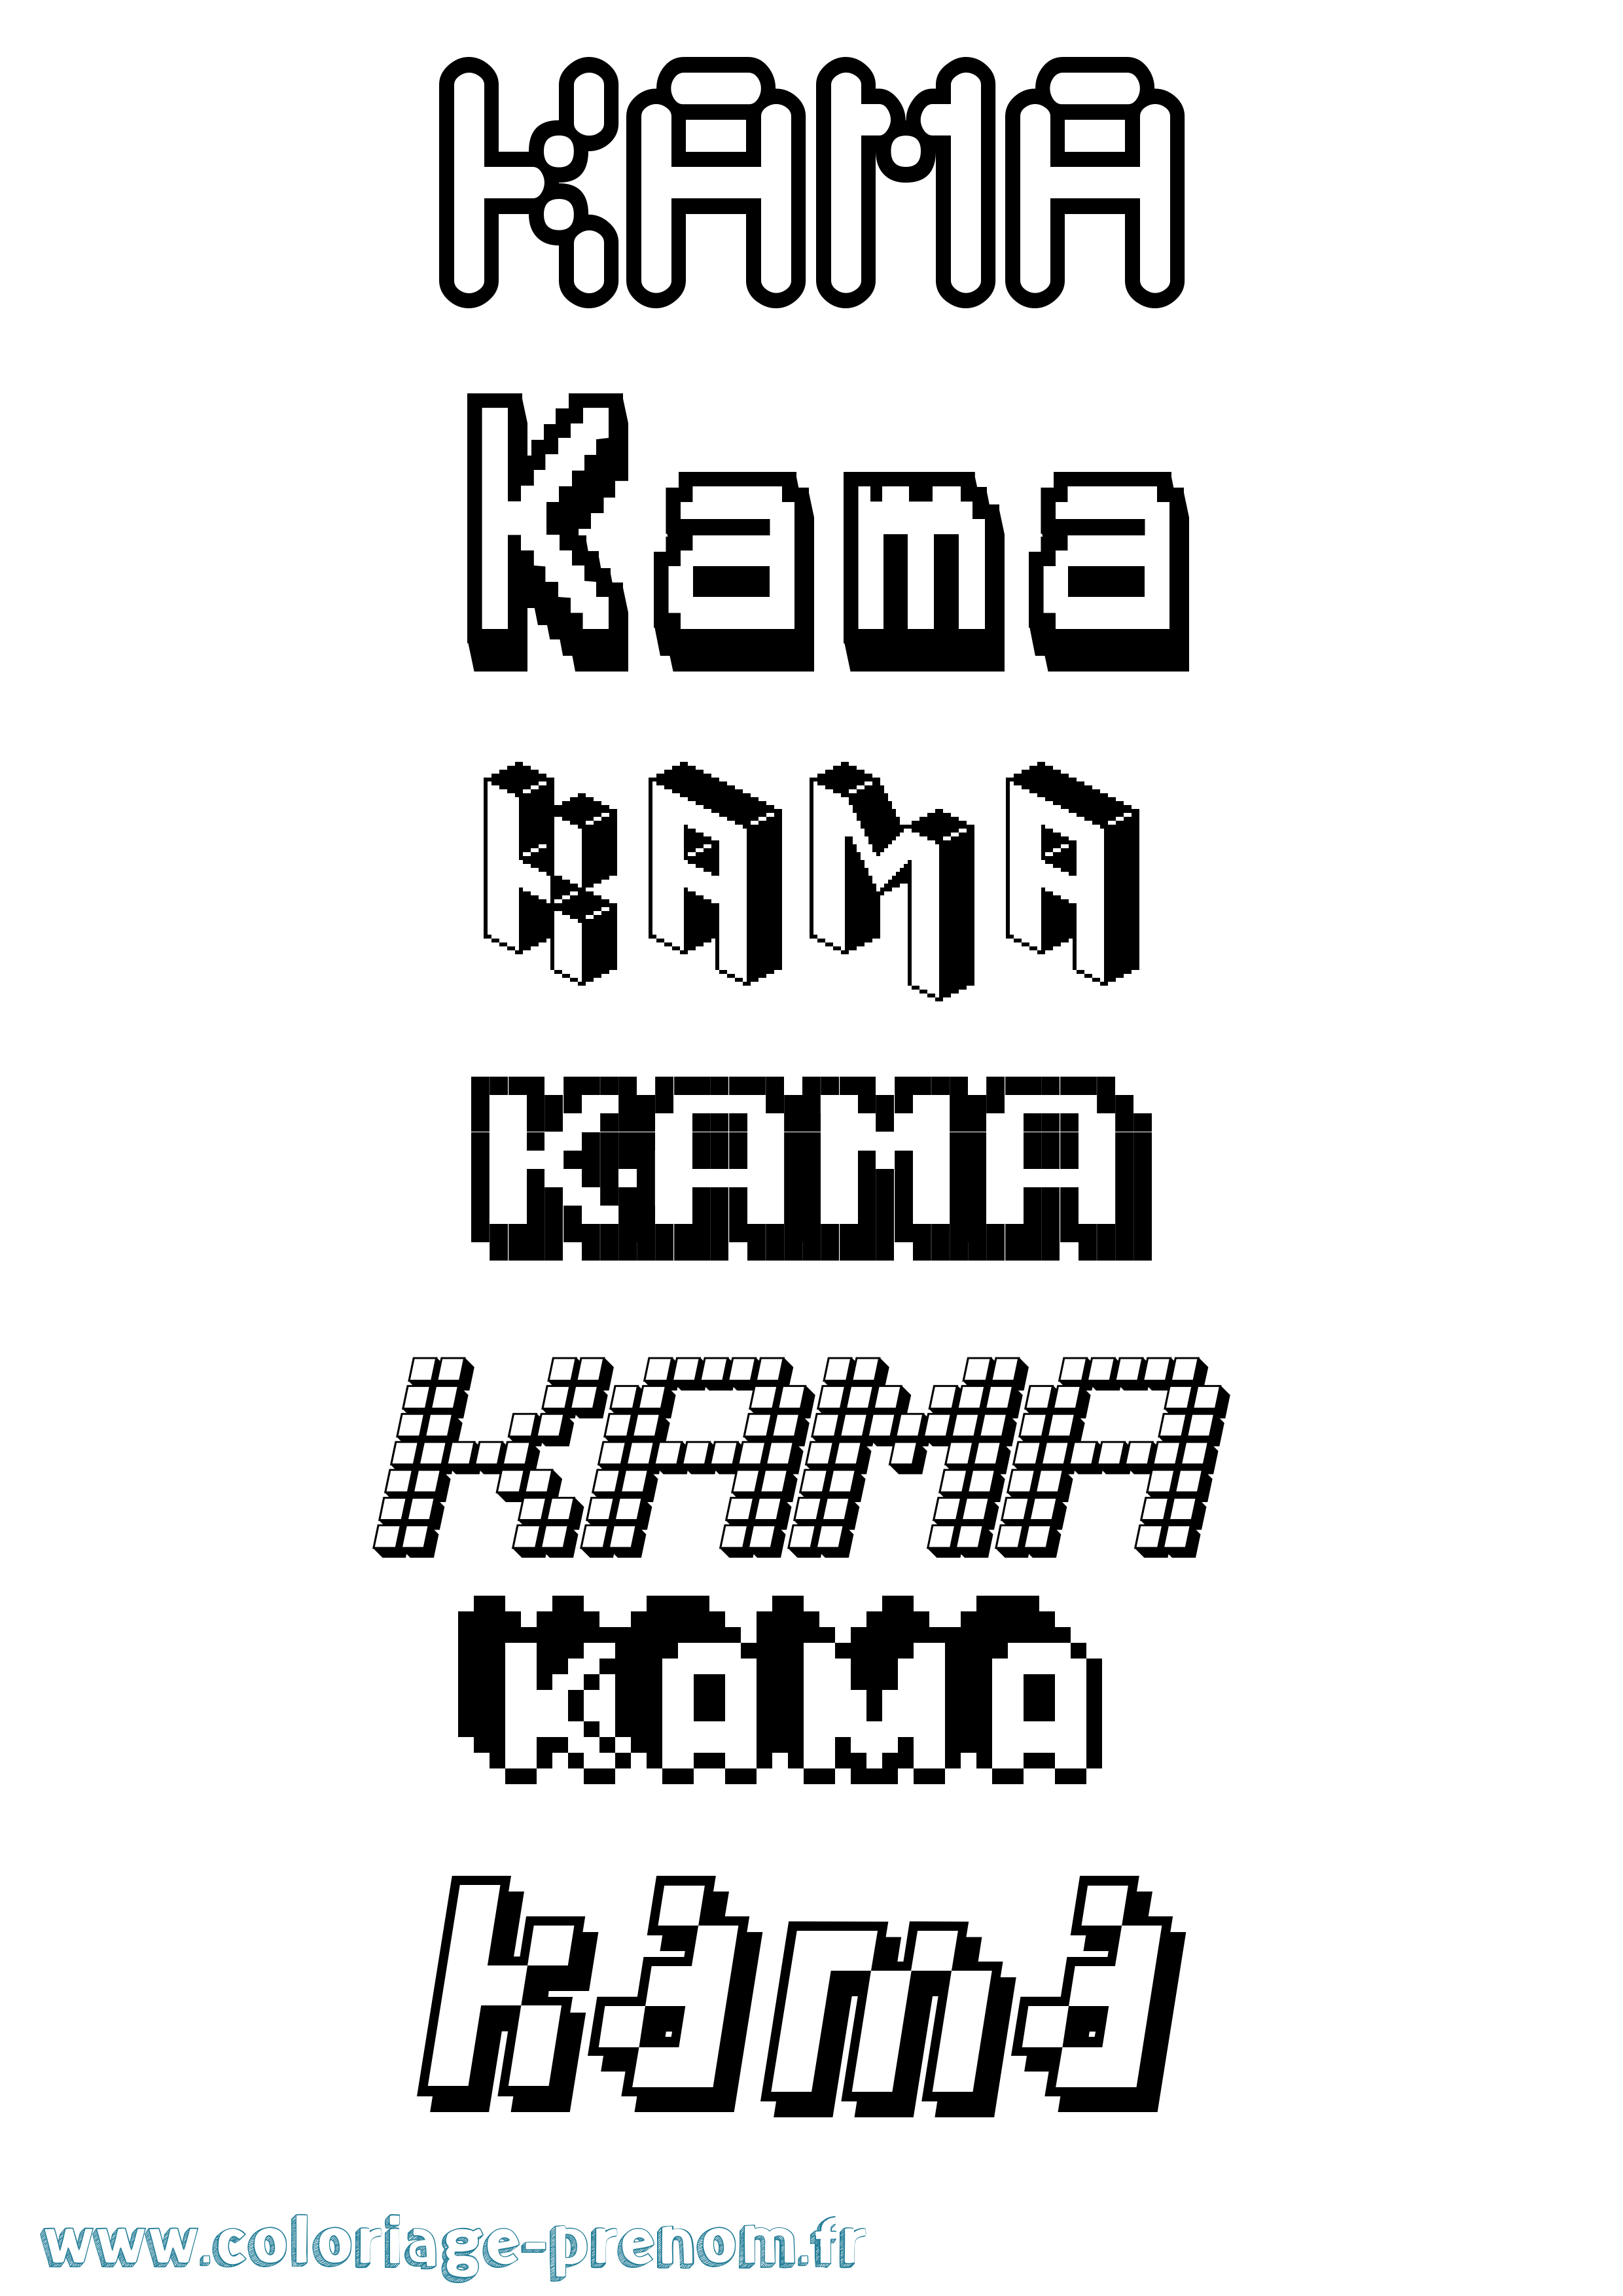 Coloriage prénom Kama Pixel